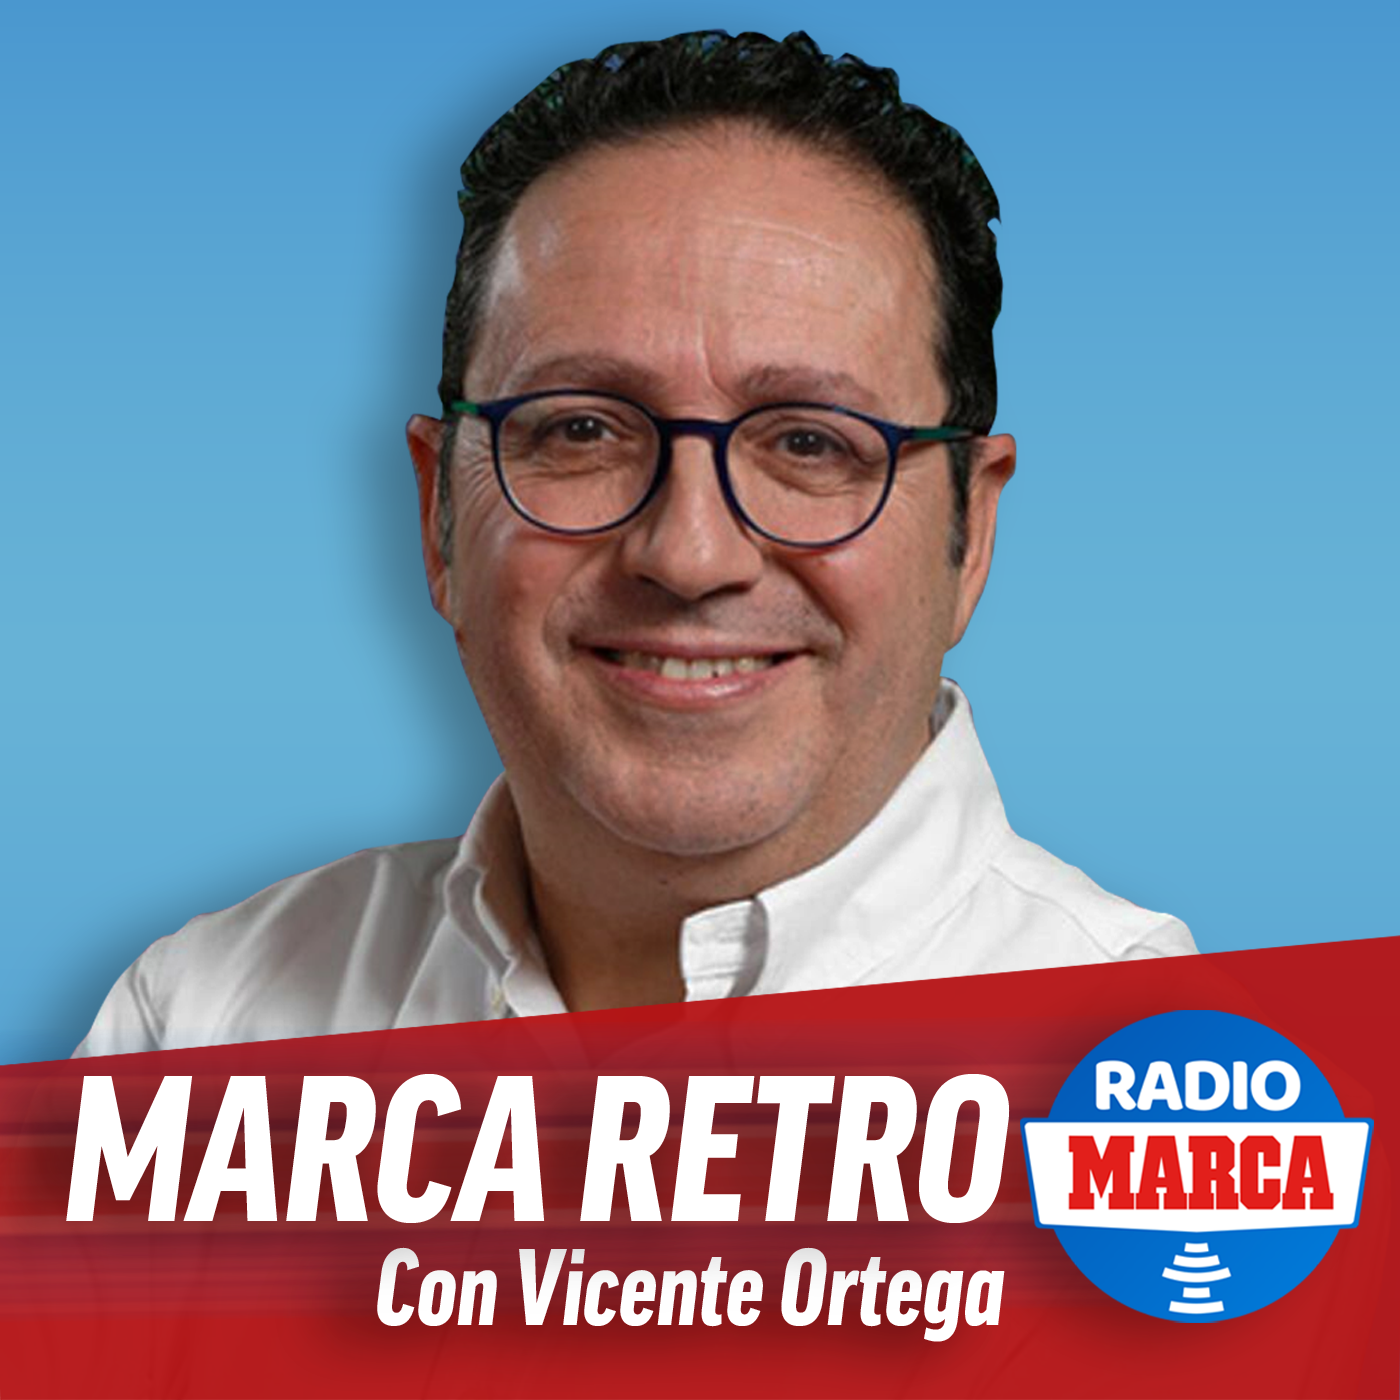 MARCA RETRO recuerda a Guruceta, Pichichi y Zamora (29/11/21)